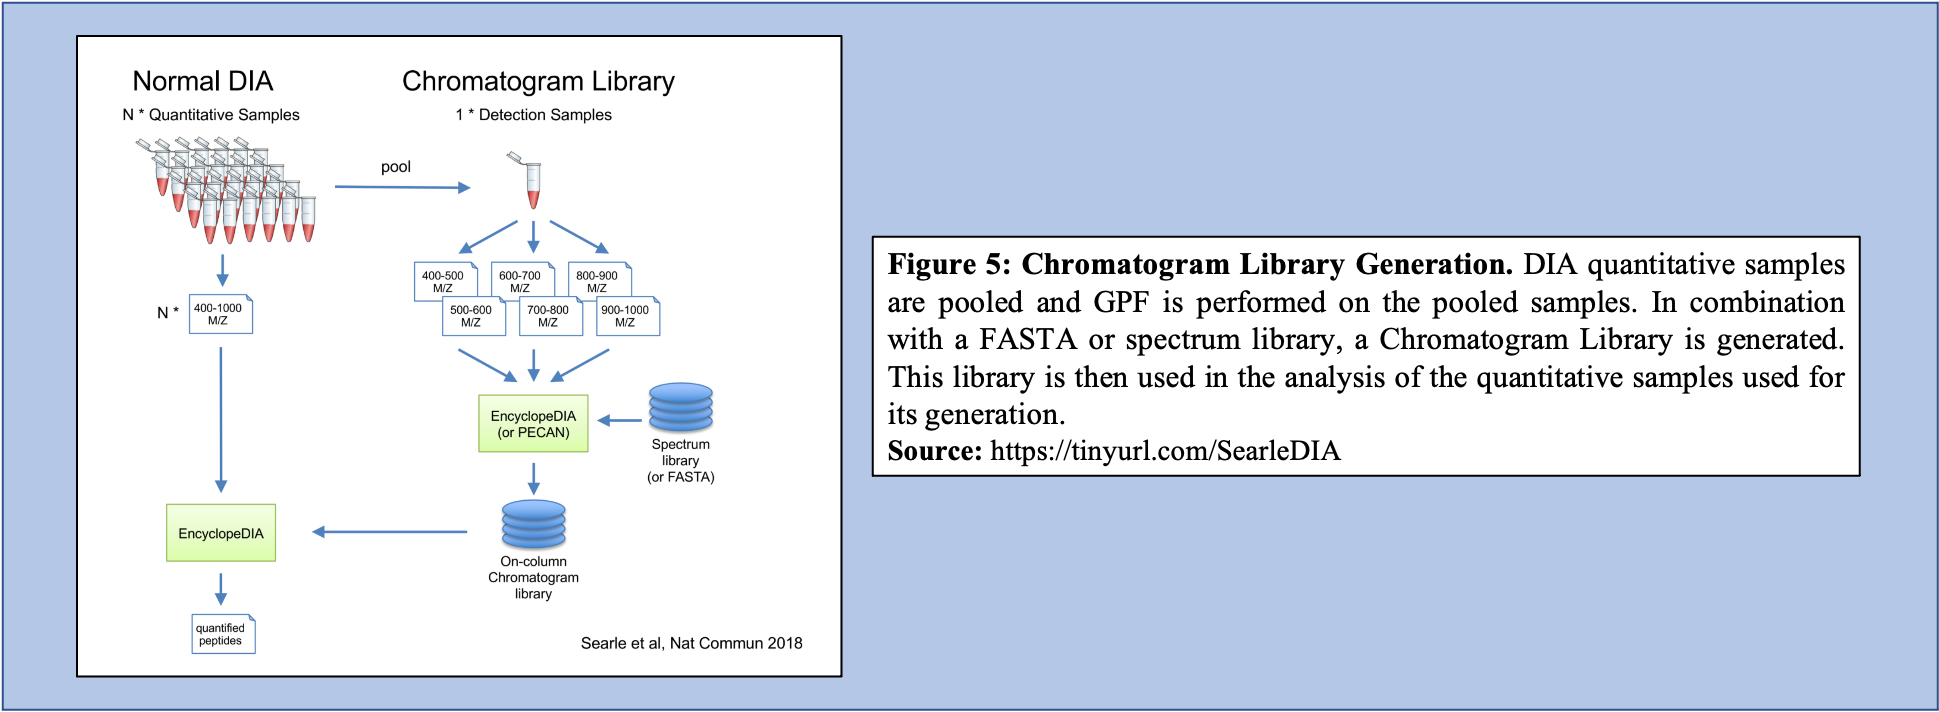 Chromatogram Library generation. 